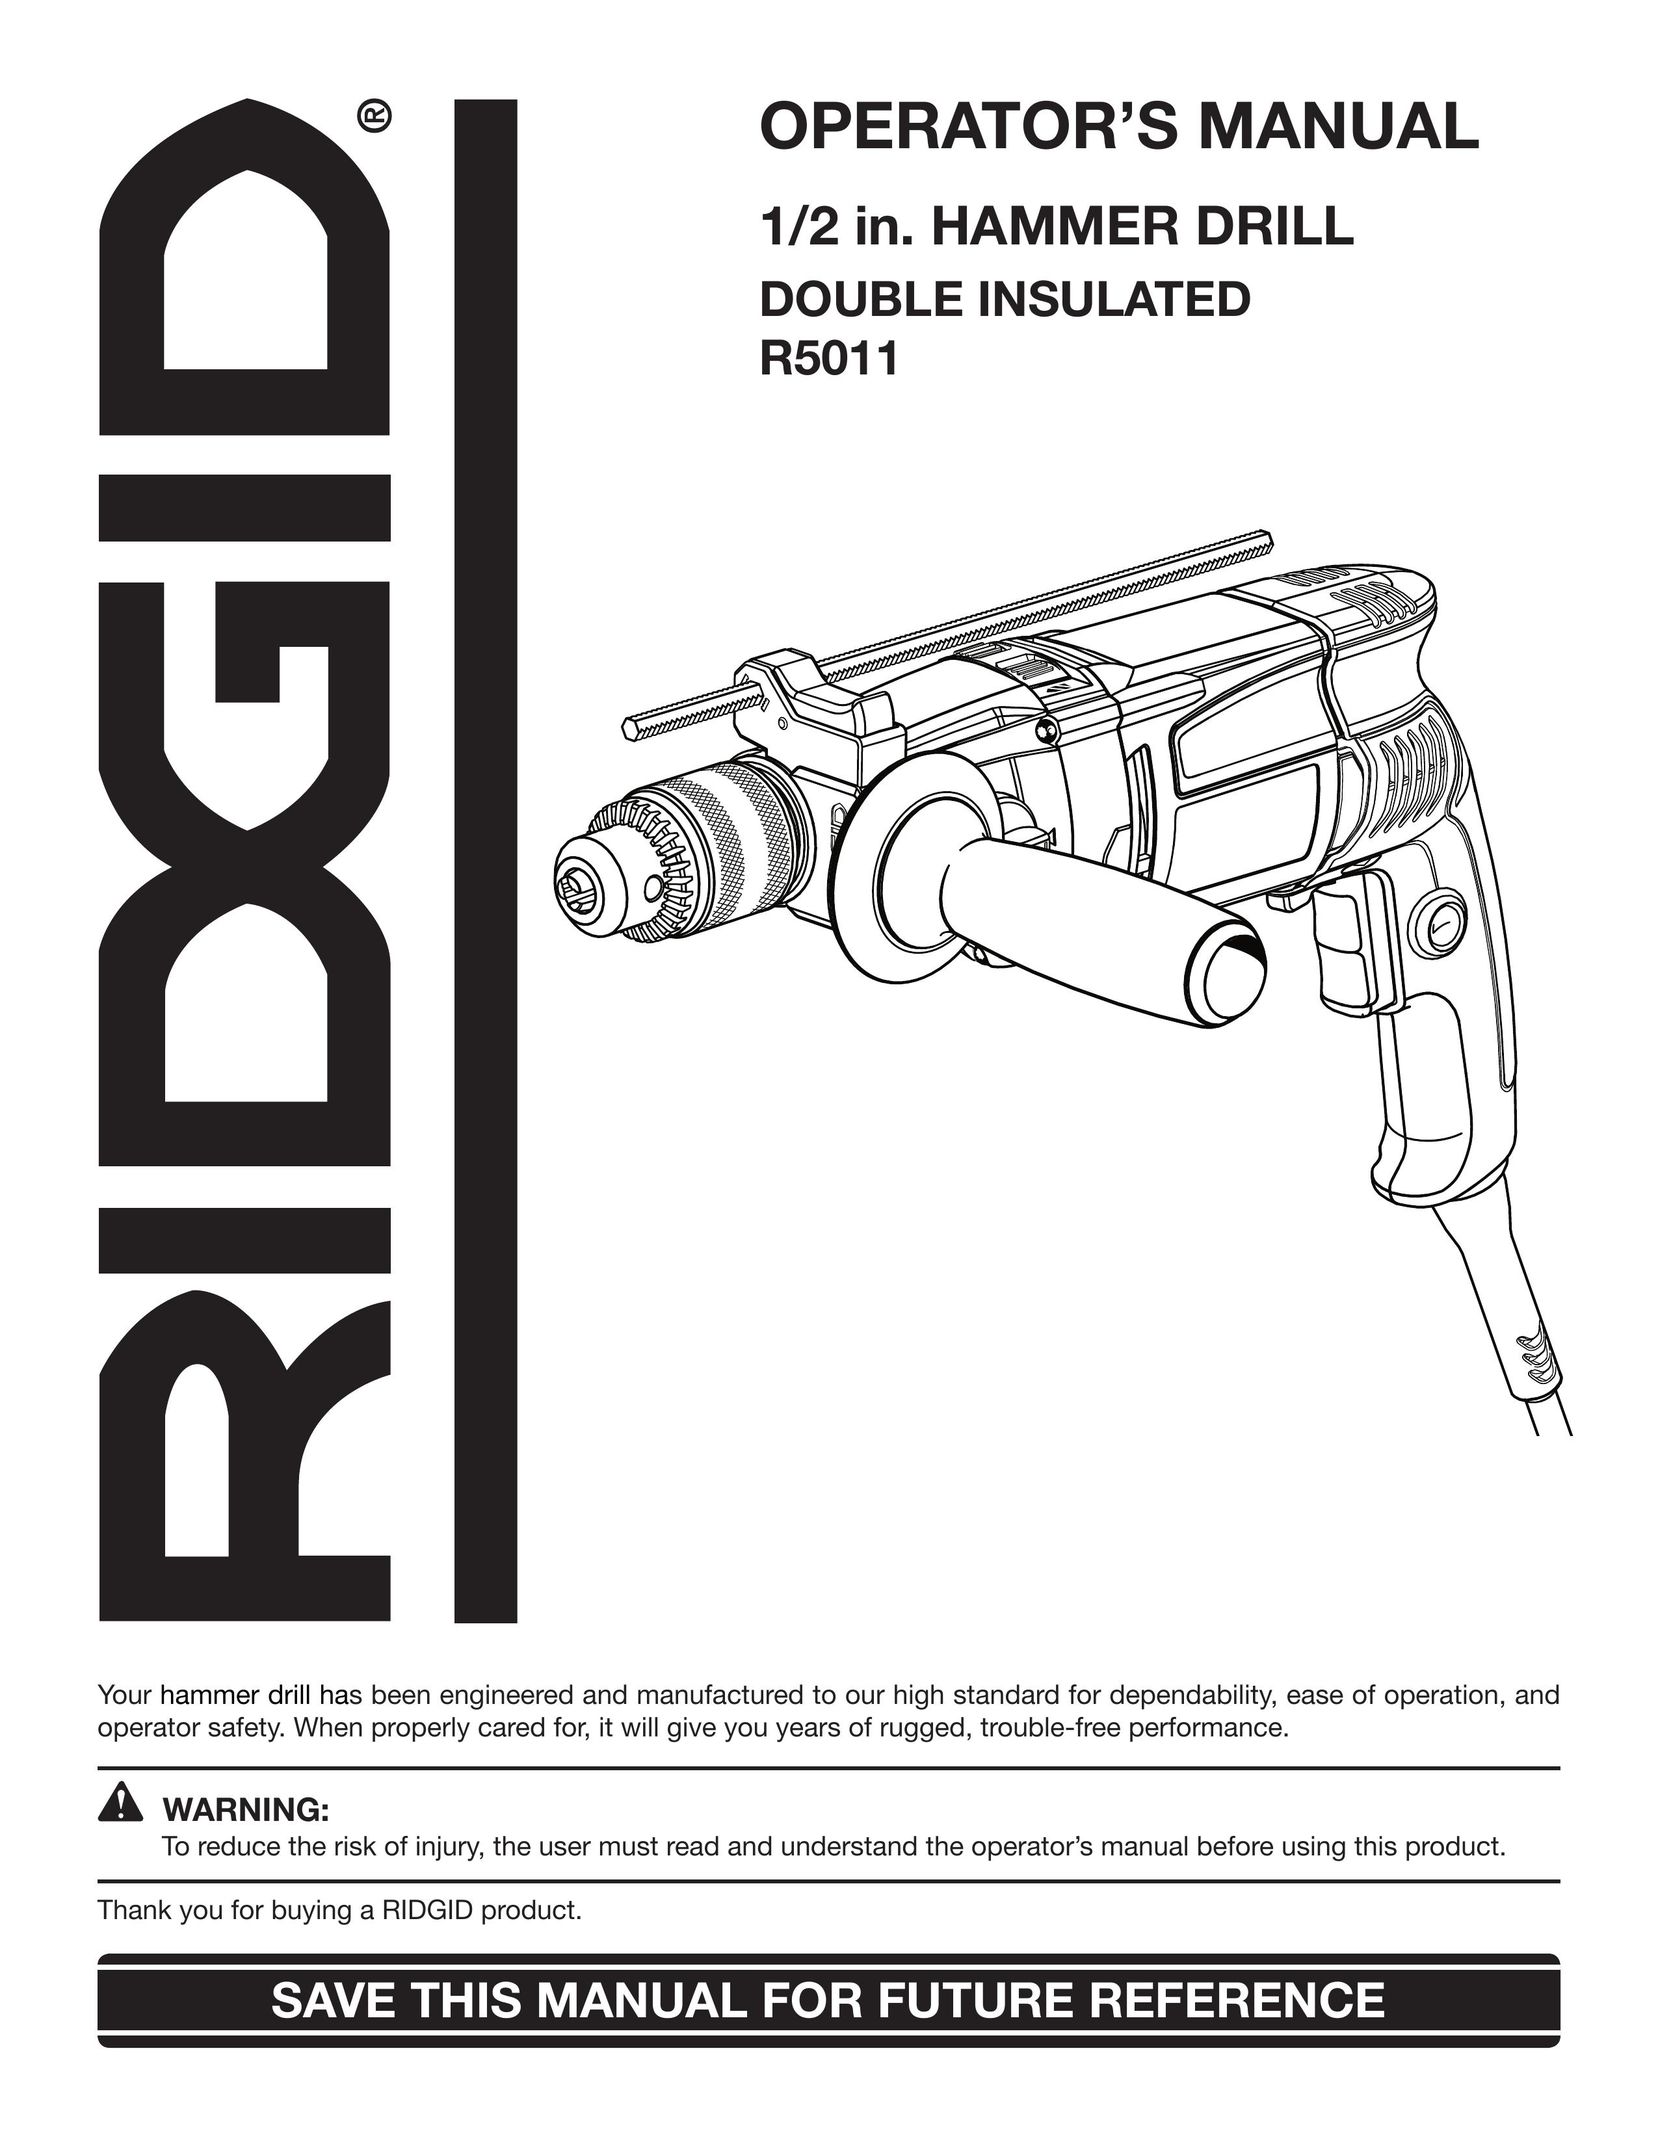 RIDGID R5011 Drill User Manual